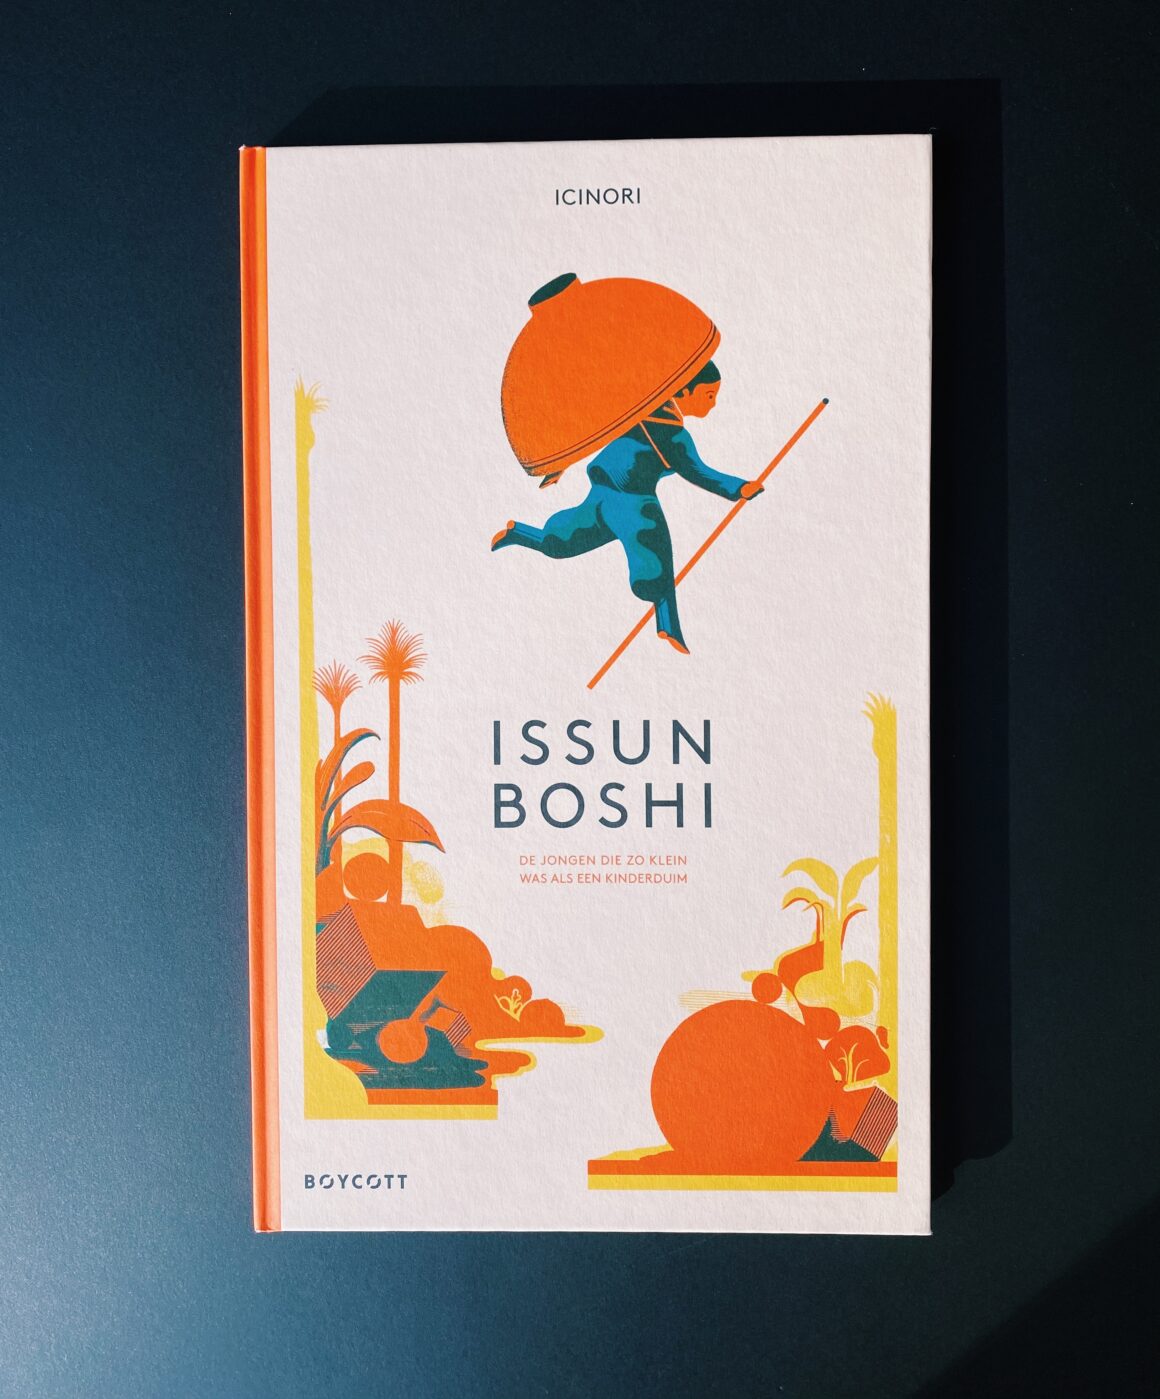 Issun Boshi | Icinori